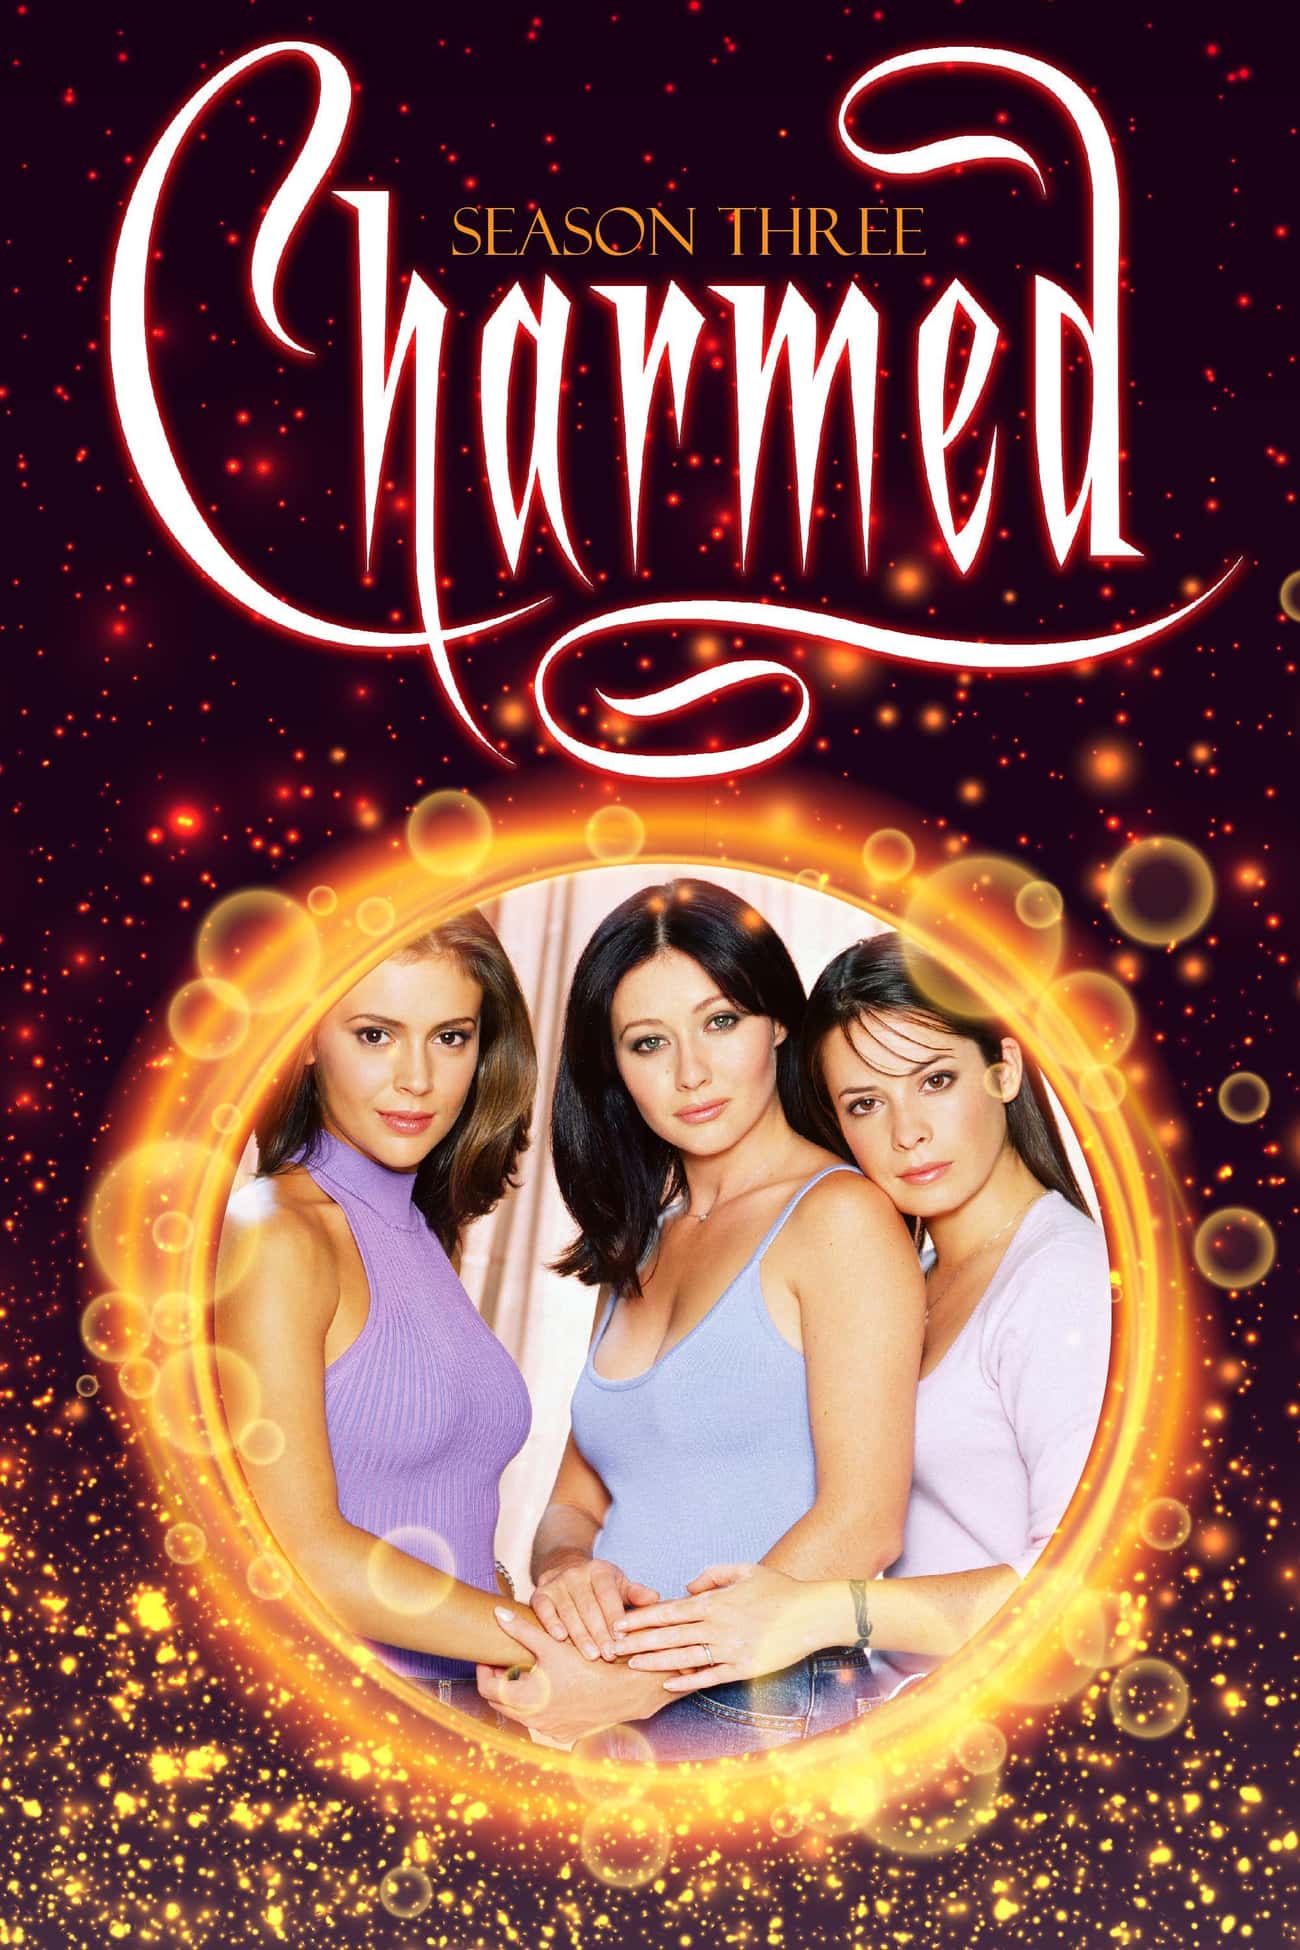 Charmed - Season 3